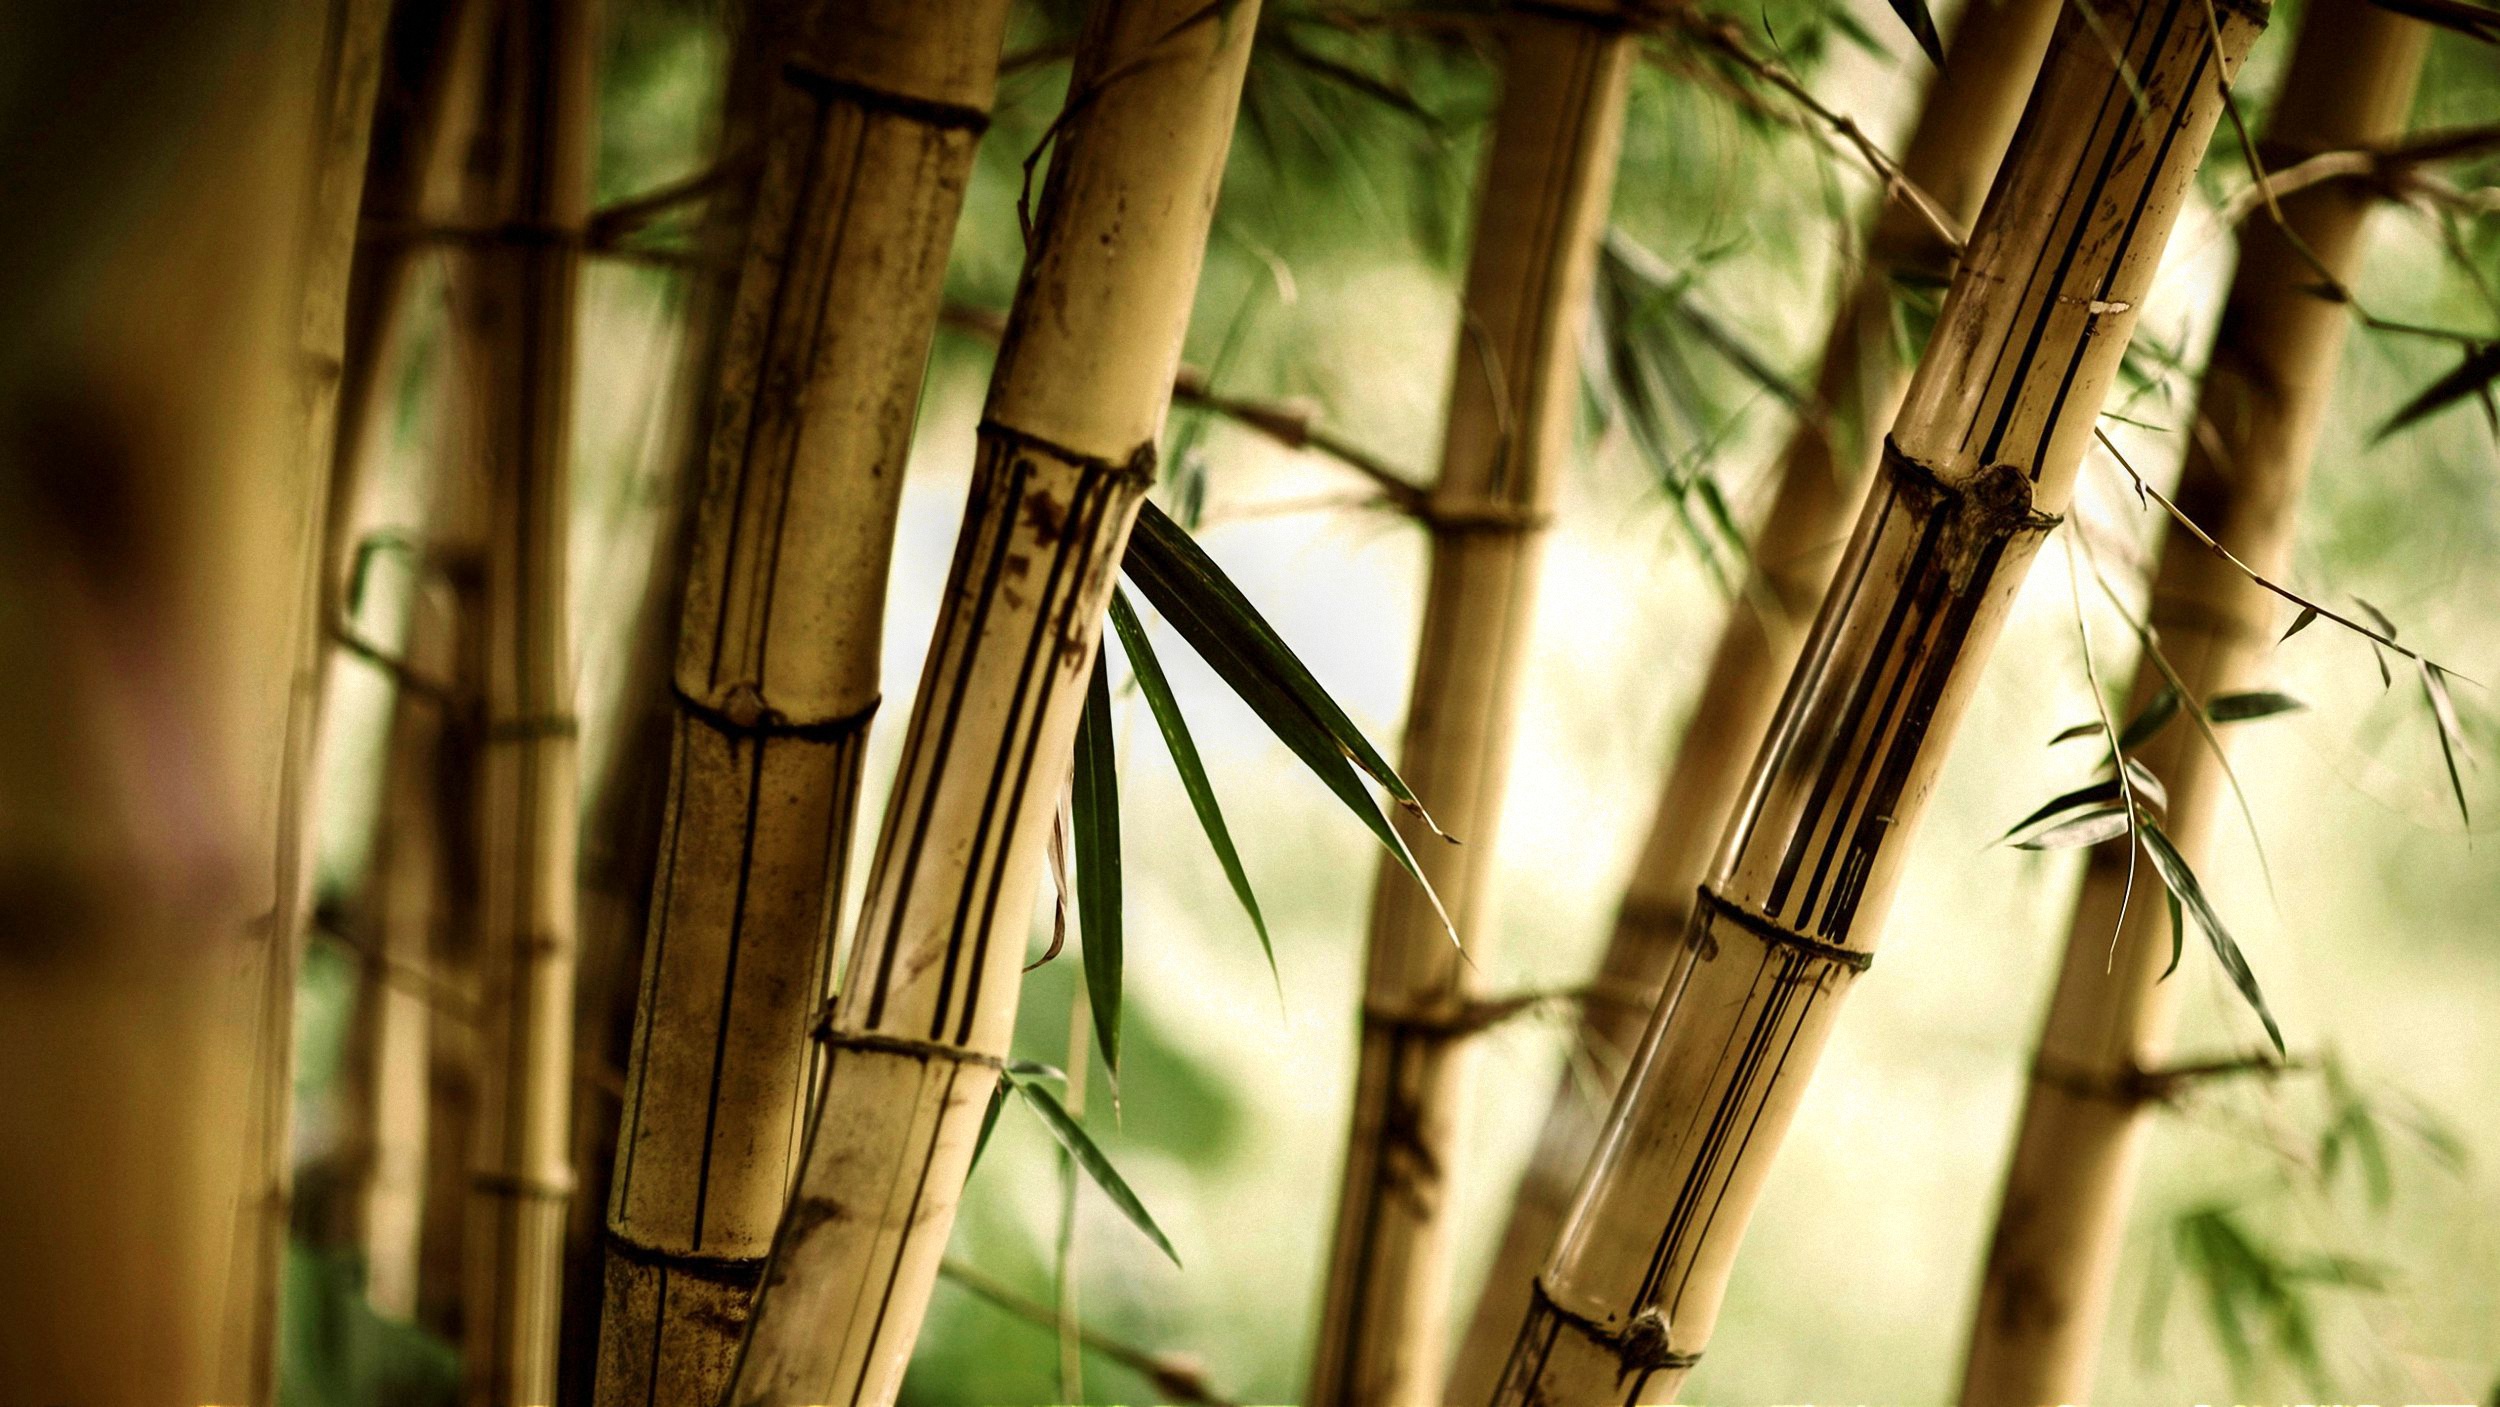 Download A fresh look at green bamboo Wallpaper | Wallpapers.com